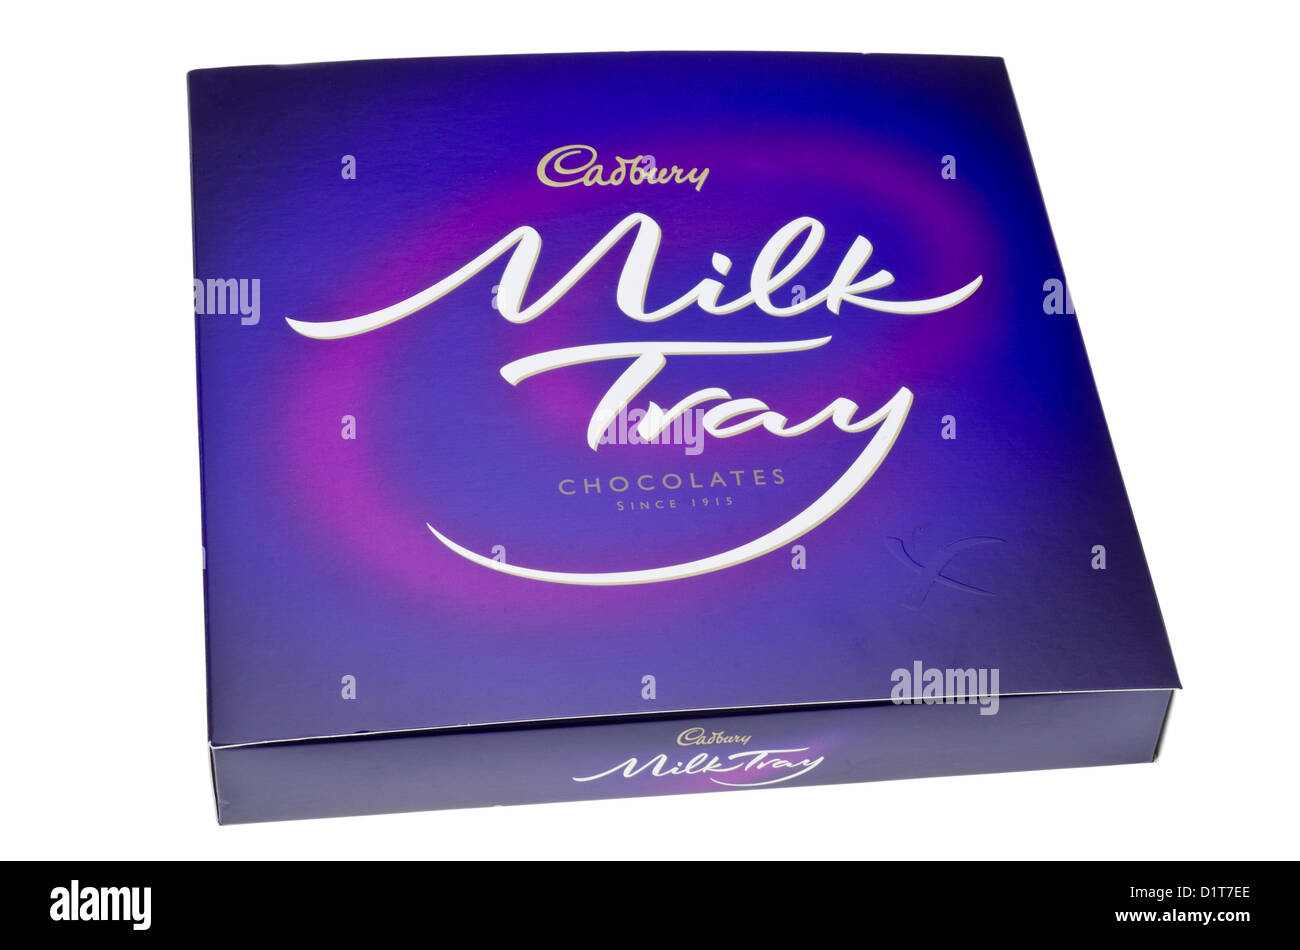 Box of Cadbury Milk Tray Chocolates Stock Photo - Alamy